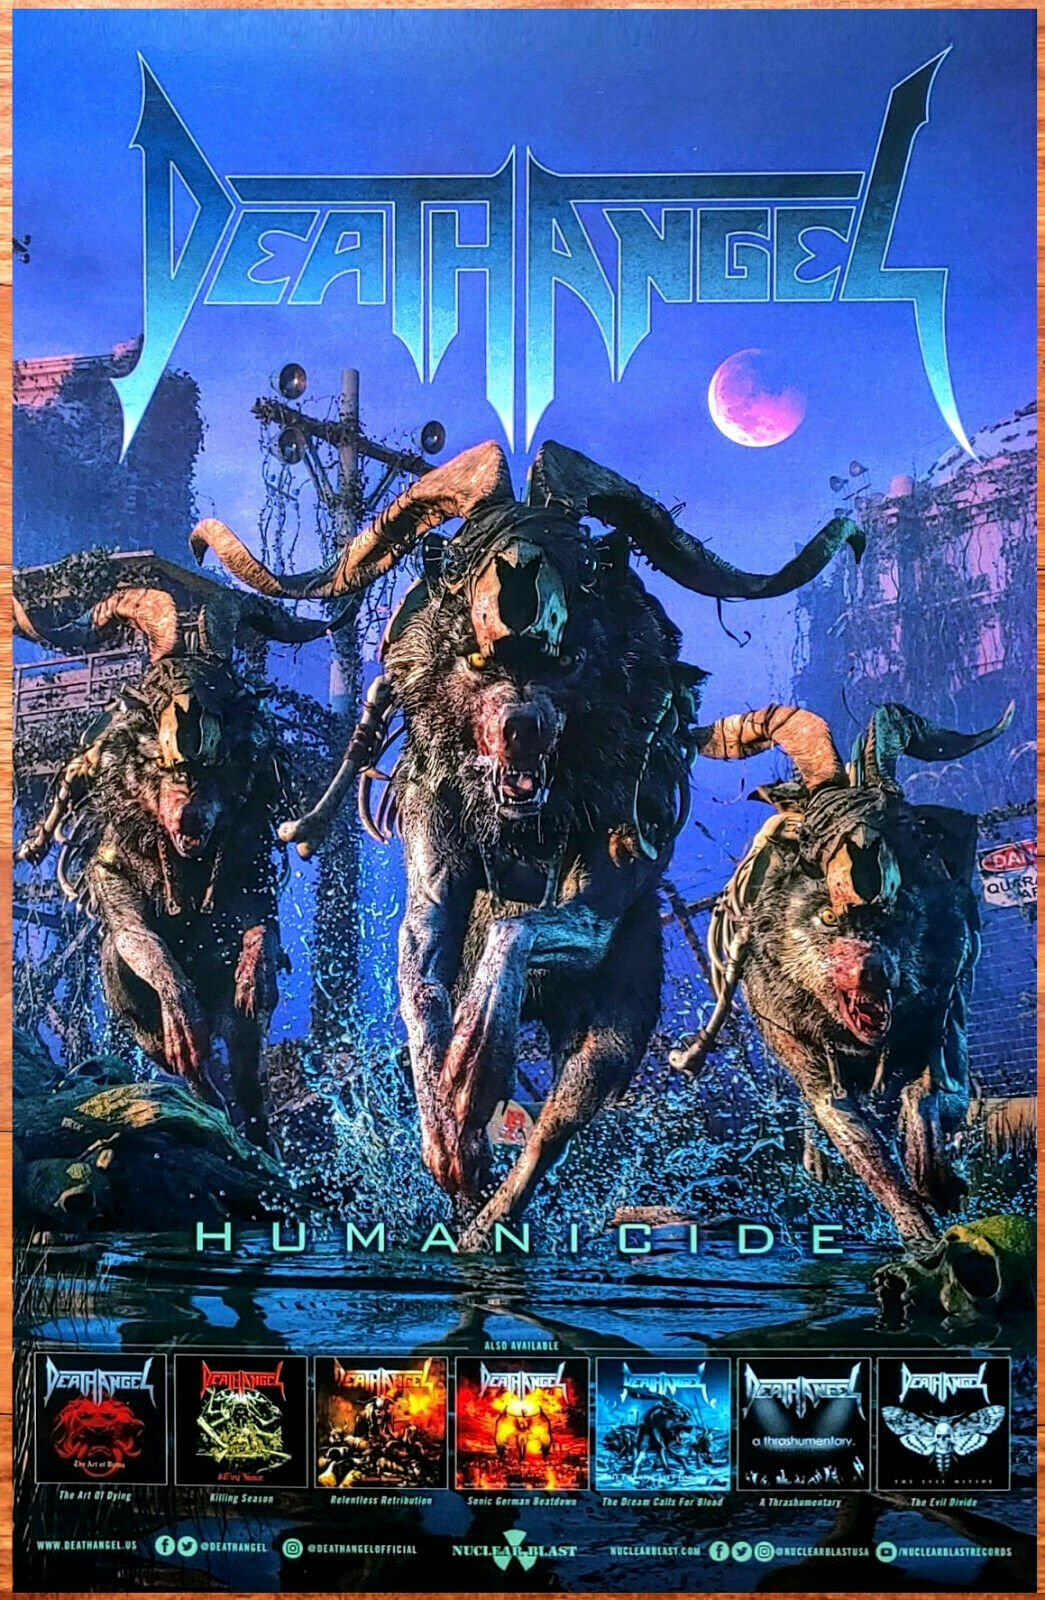 Death Angel Humancide Ltd Ed New Rare Tour Poster +bonus Metal Rock Poster!